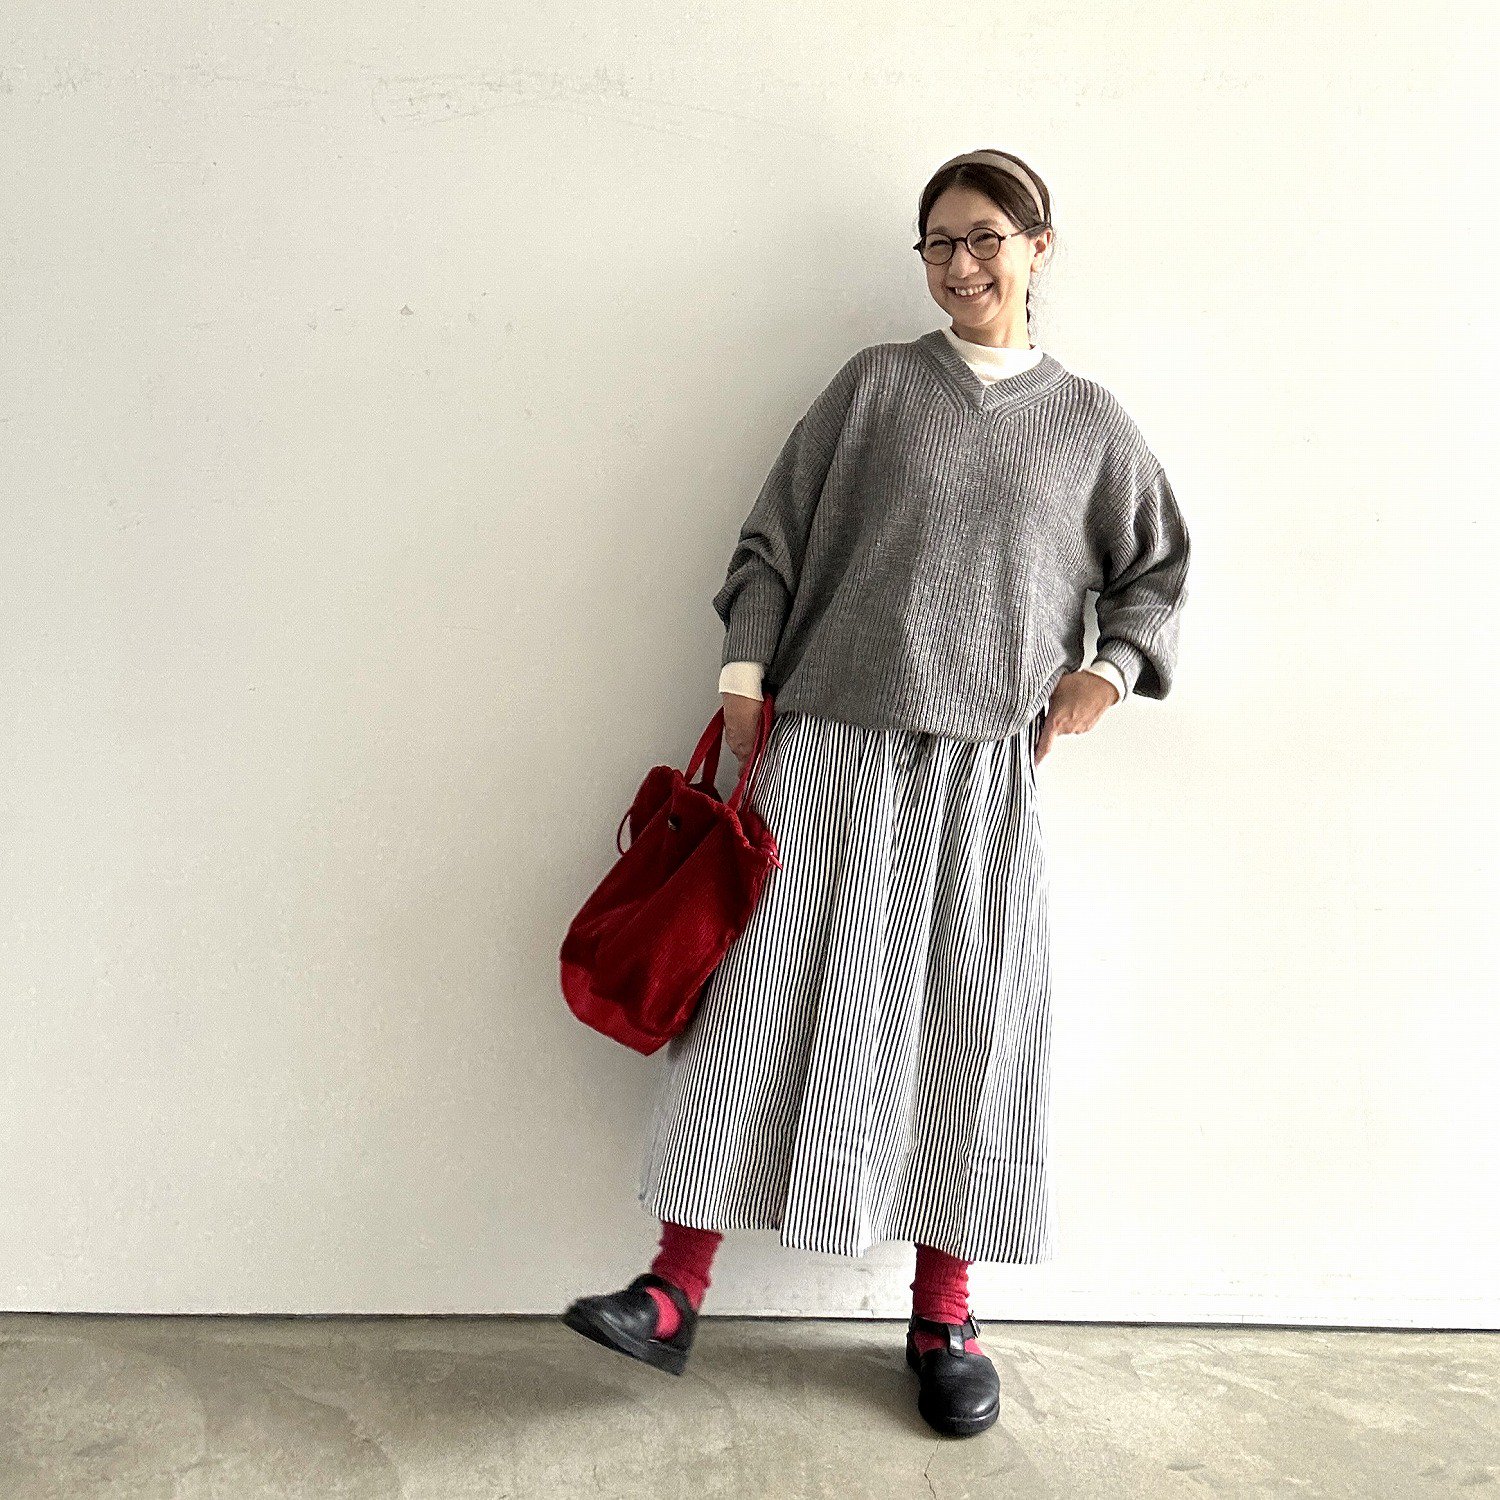 Anne number of 「しばらくぶりのストライプスカート」by BLUELAKE MARKET  HACHITEN,hachiten,ハチテン,はちてん